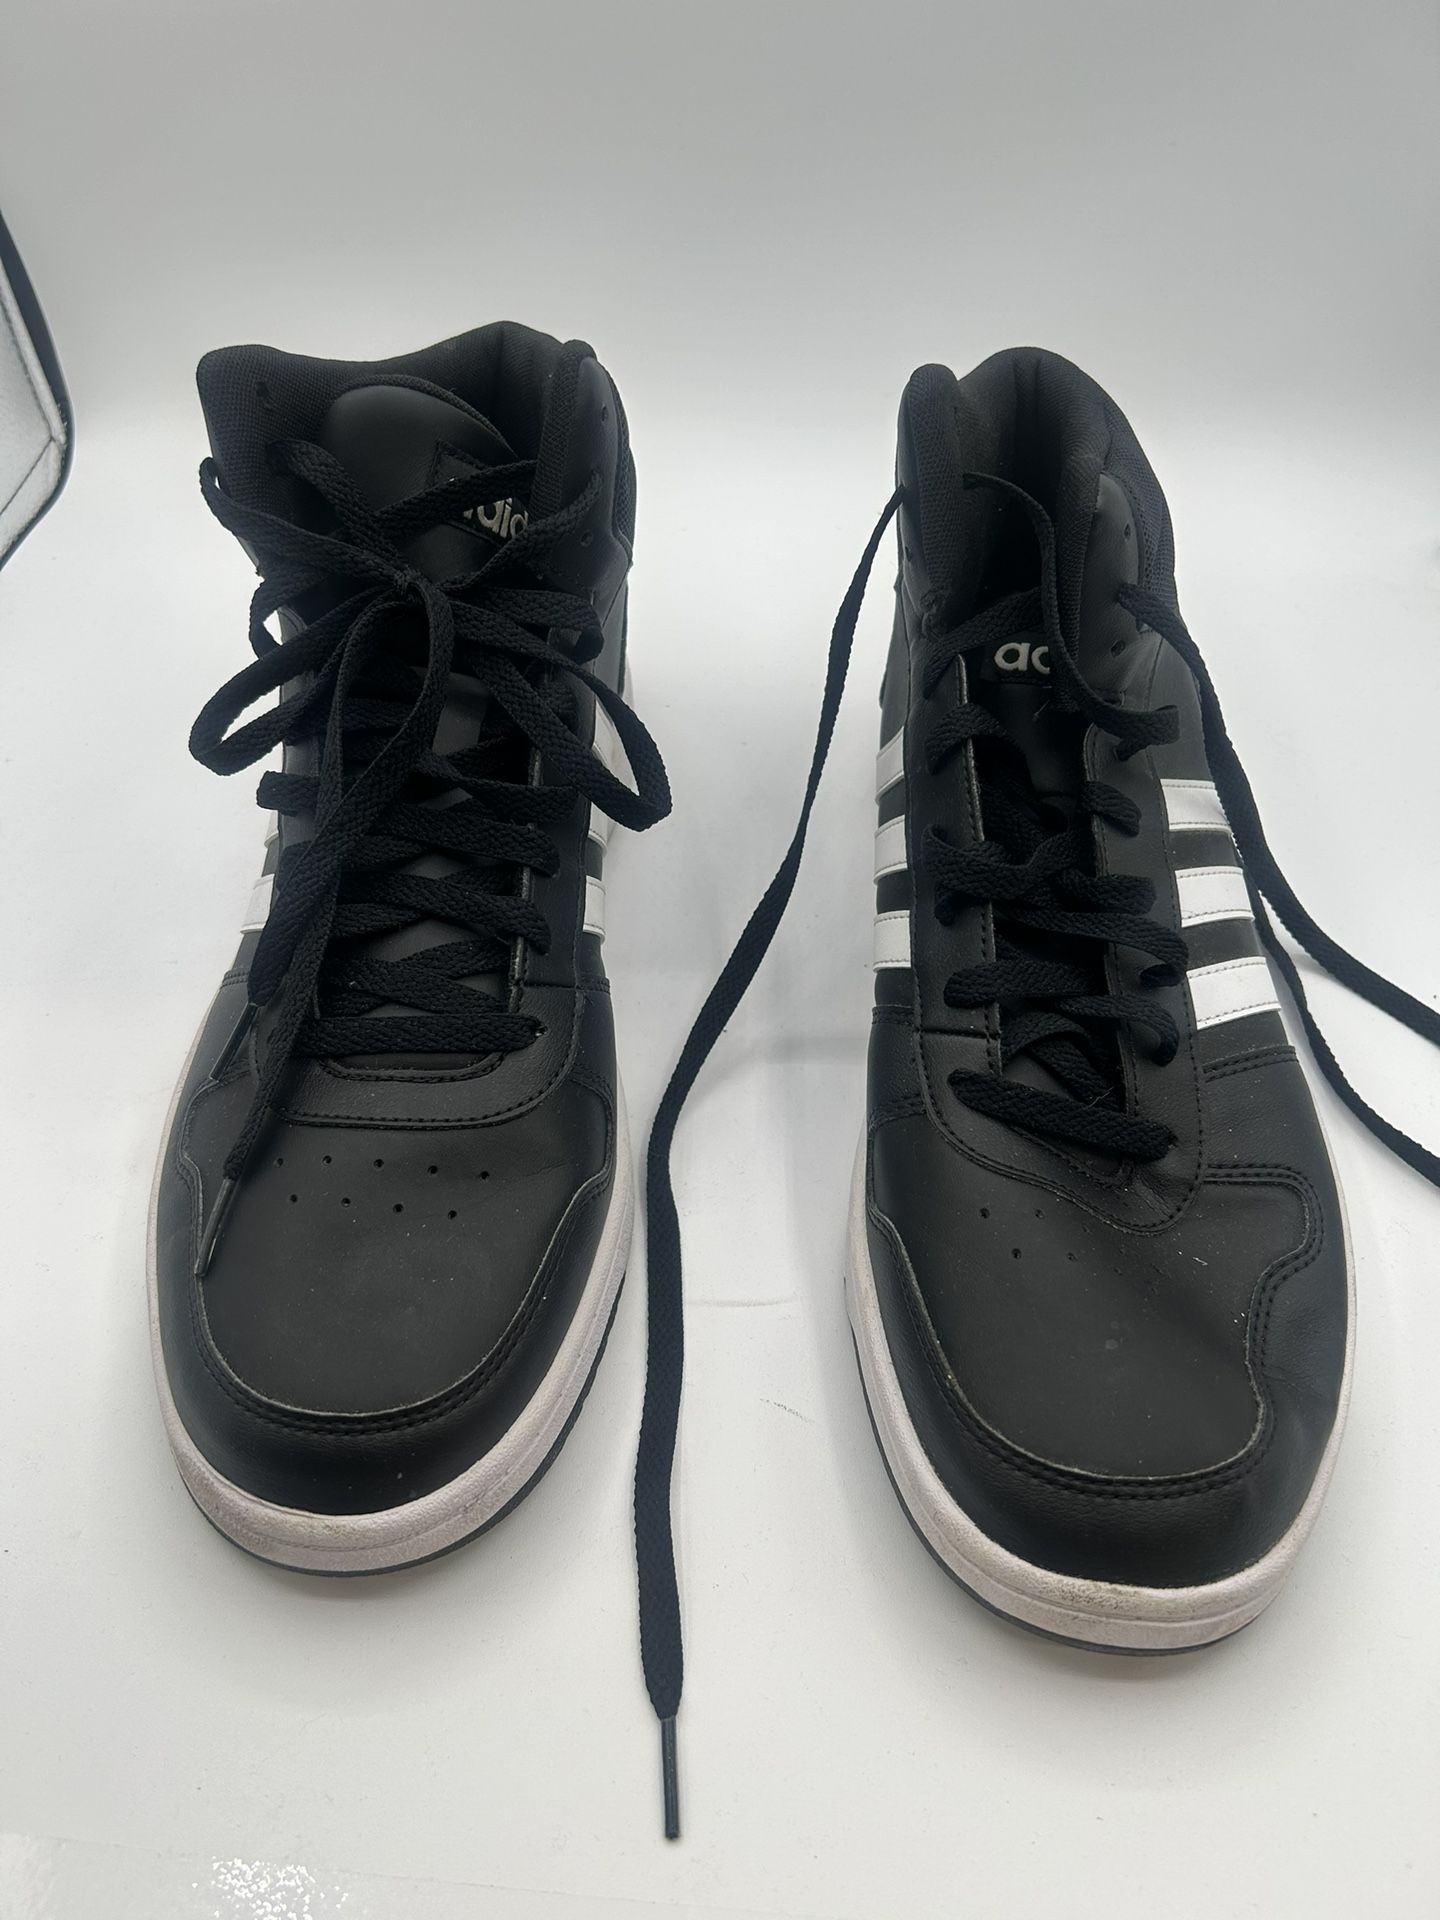 Adidas Men’s LYM 029004 / BLACK - Size 13 